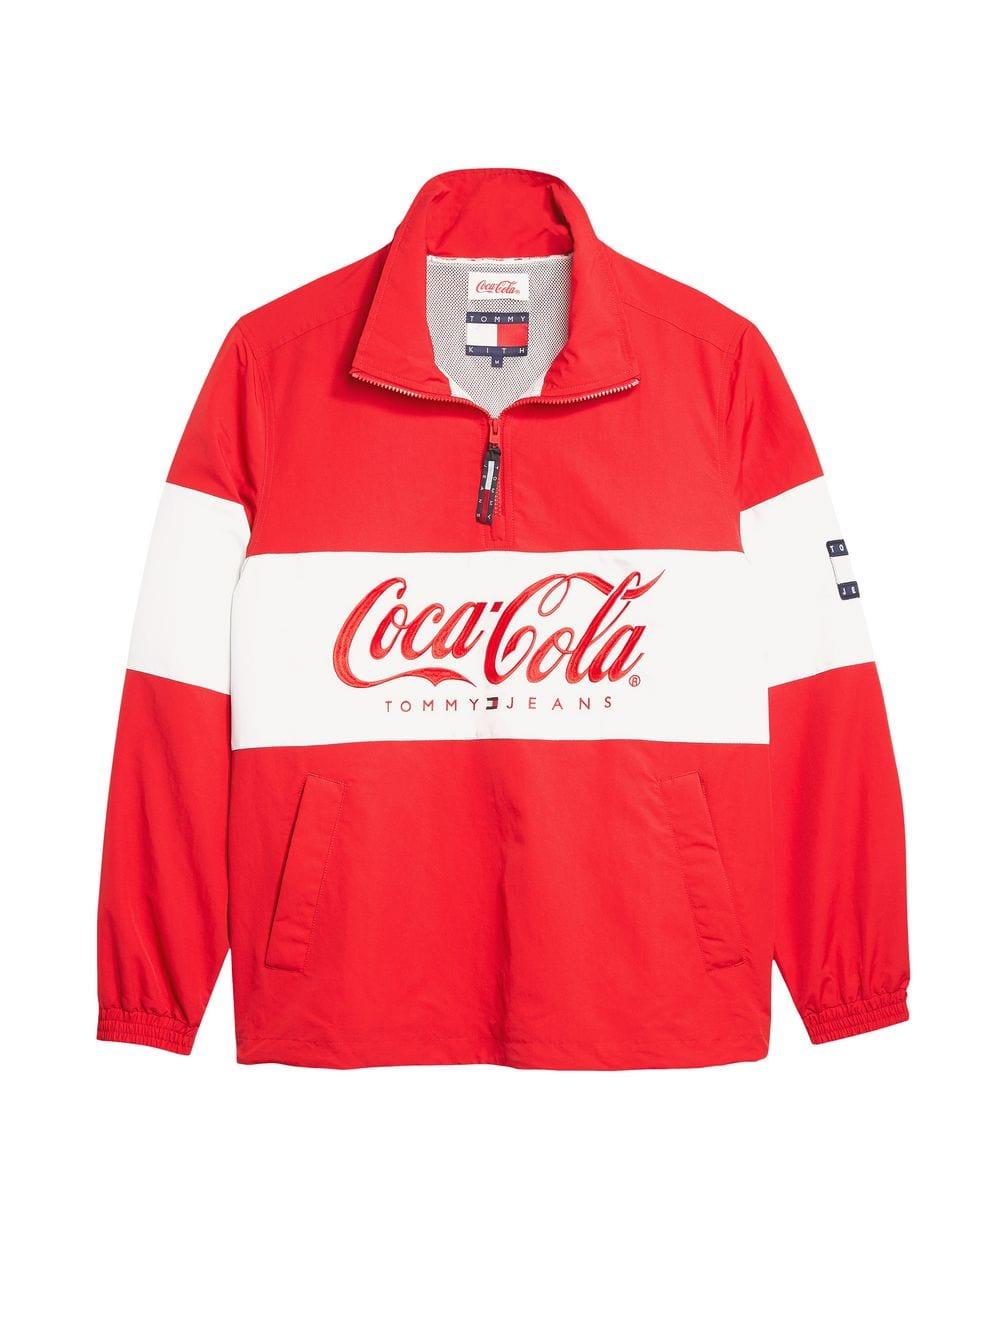 Tommy Hilfiger Denim X Coca-cola Jacket 